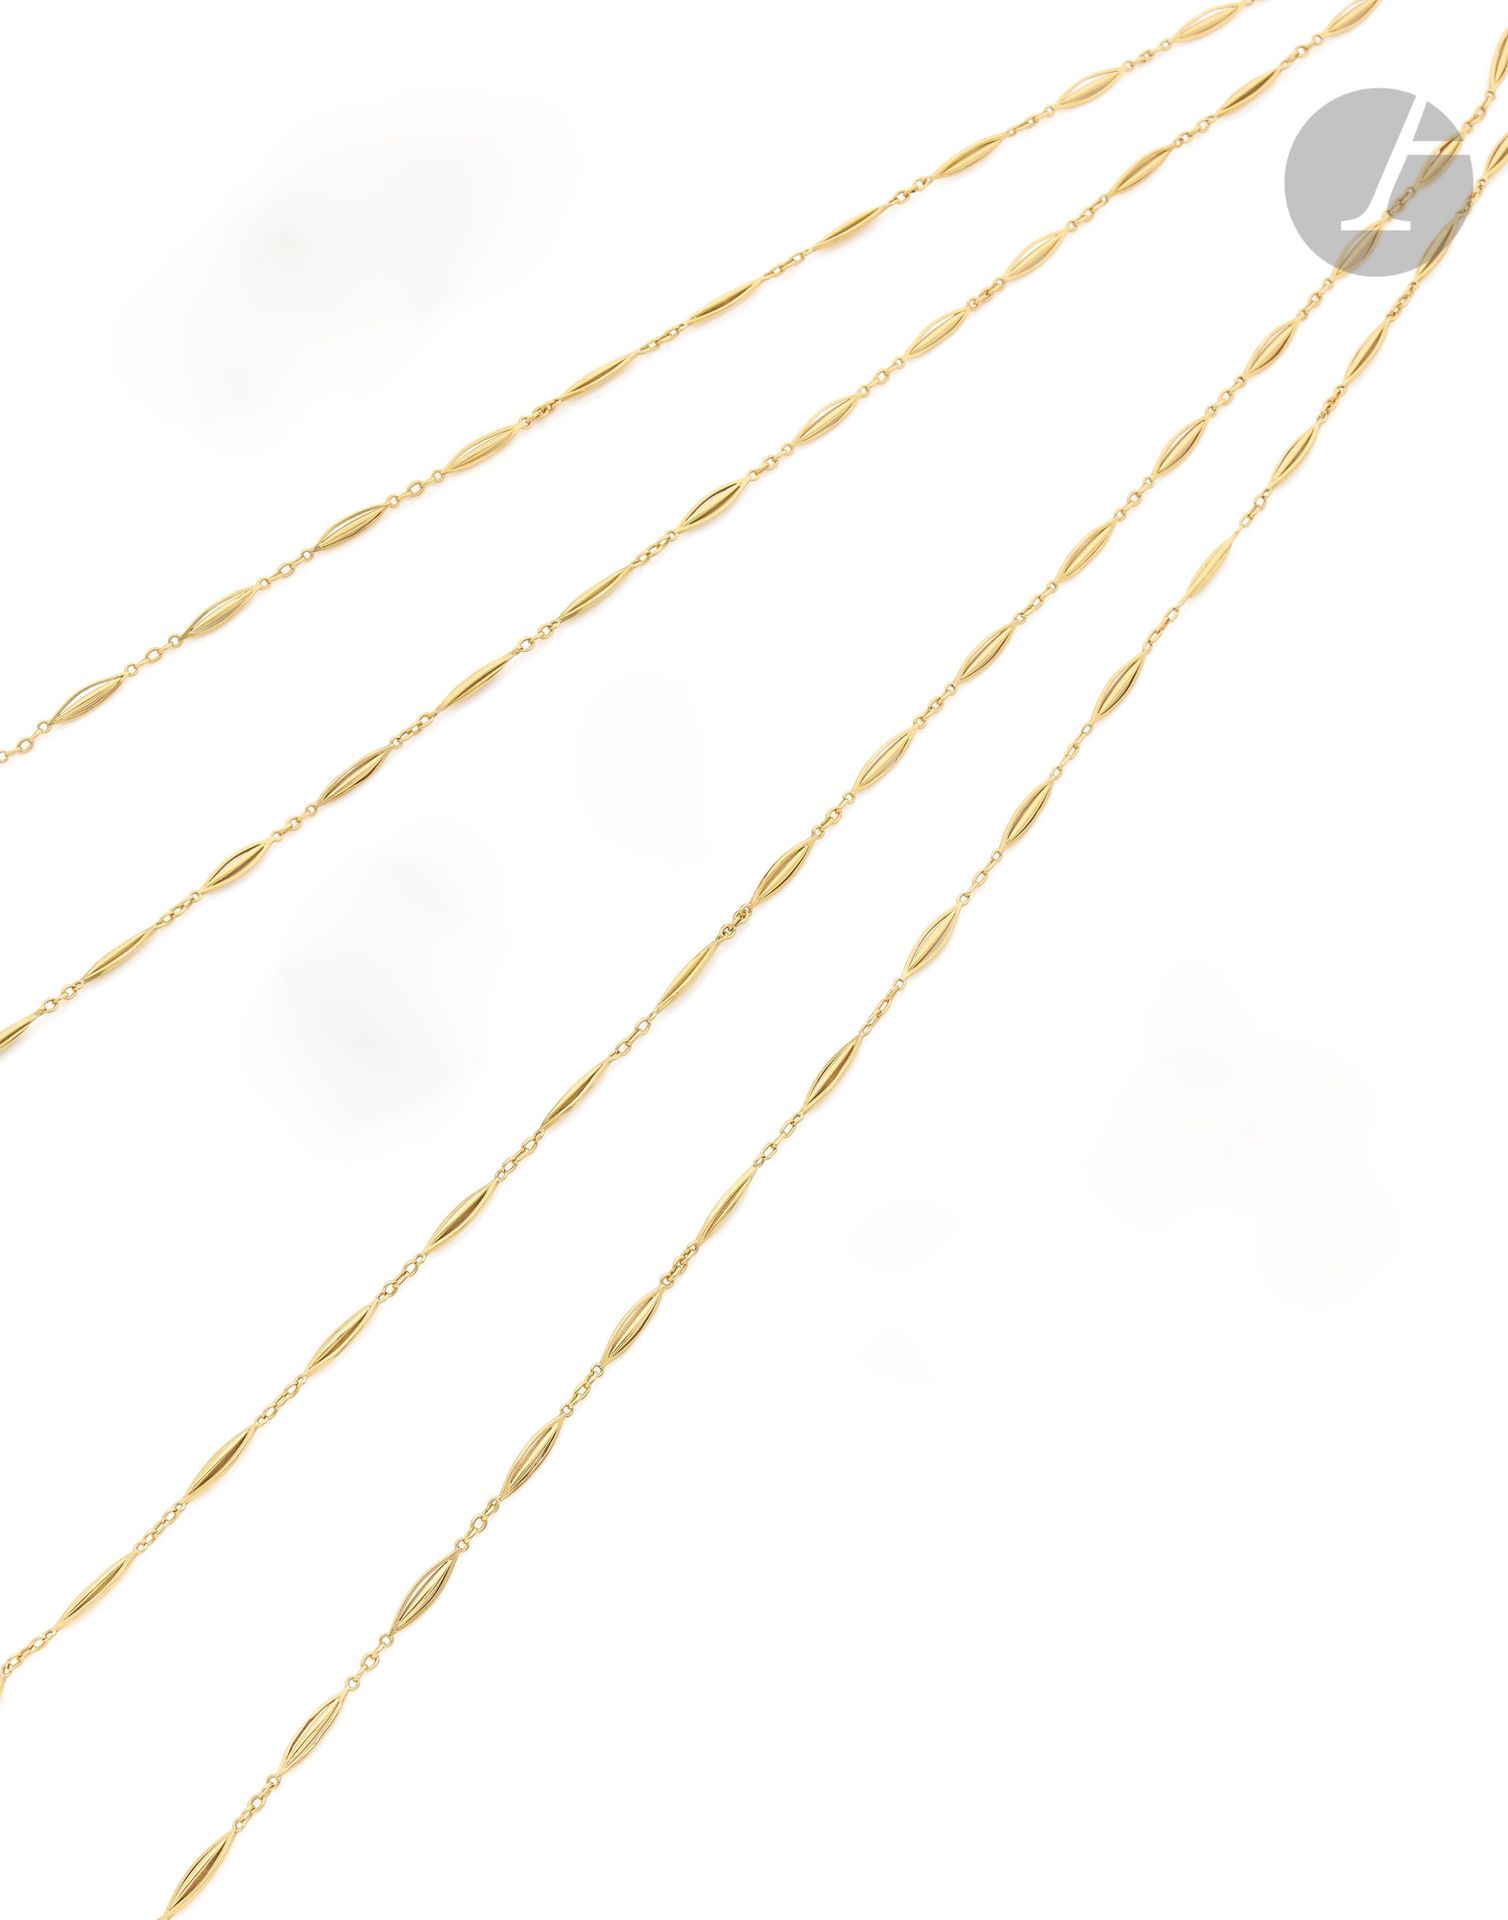 Null 18K（750）金锥形链节长项链。20世纪初的作品。长度：约154厘米。重量：50.9克

20世纪初的长链